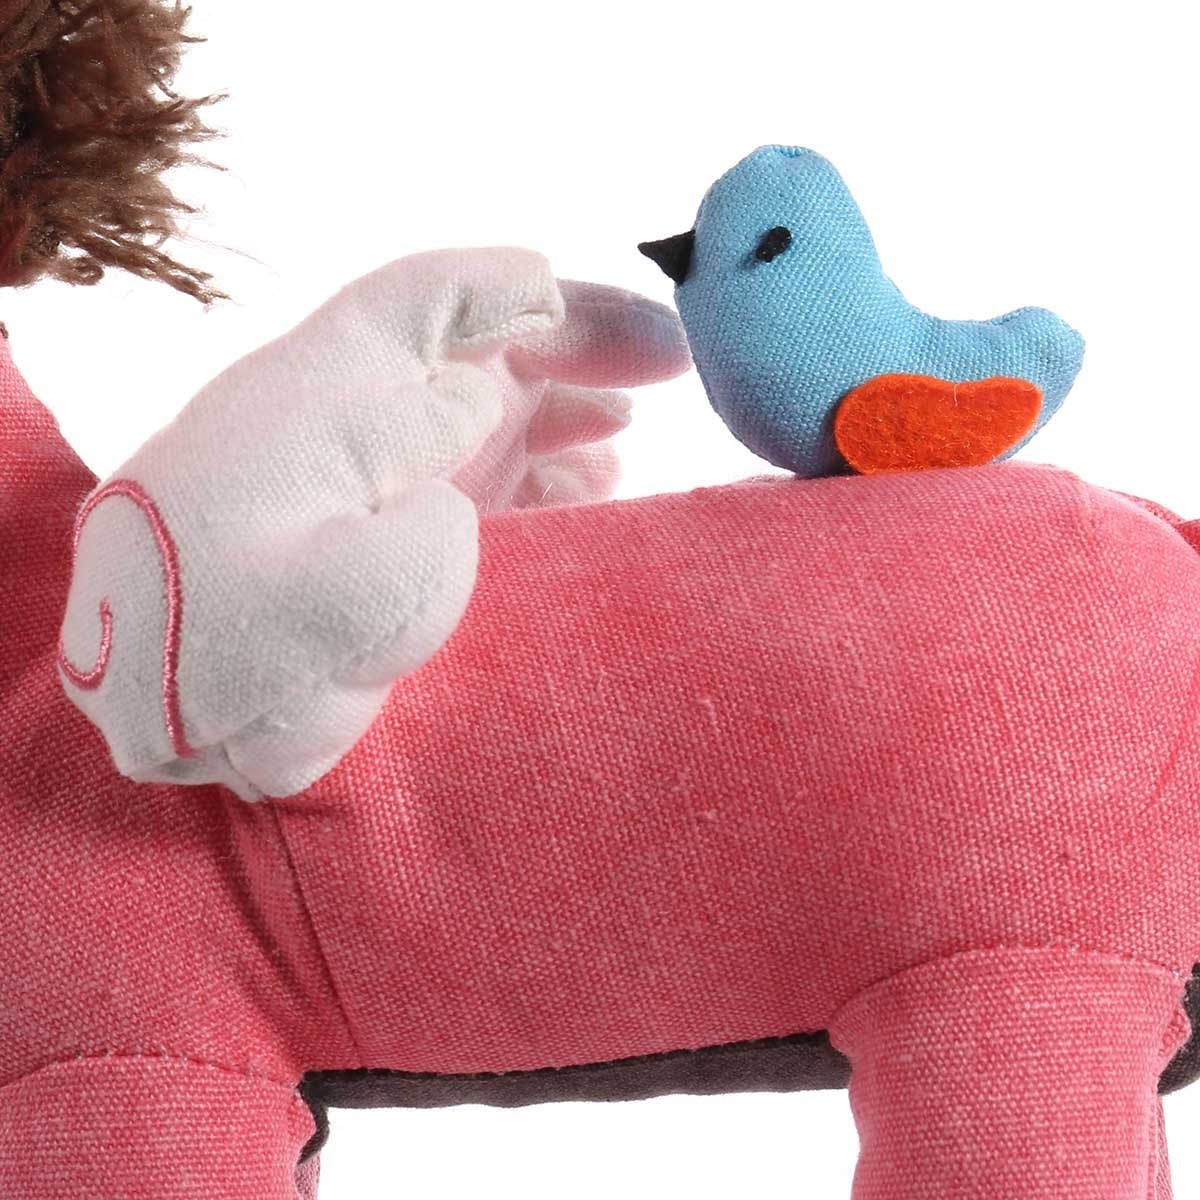 Pink Unicorn Bedside-Table Lamp & Girls Night Light by Nursery Toys